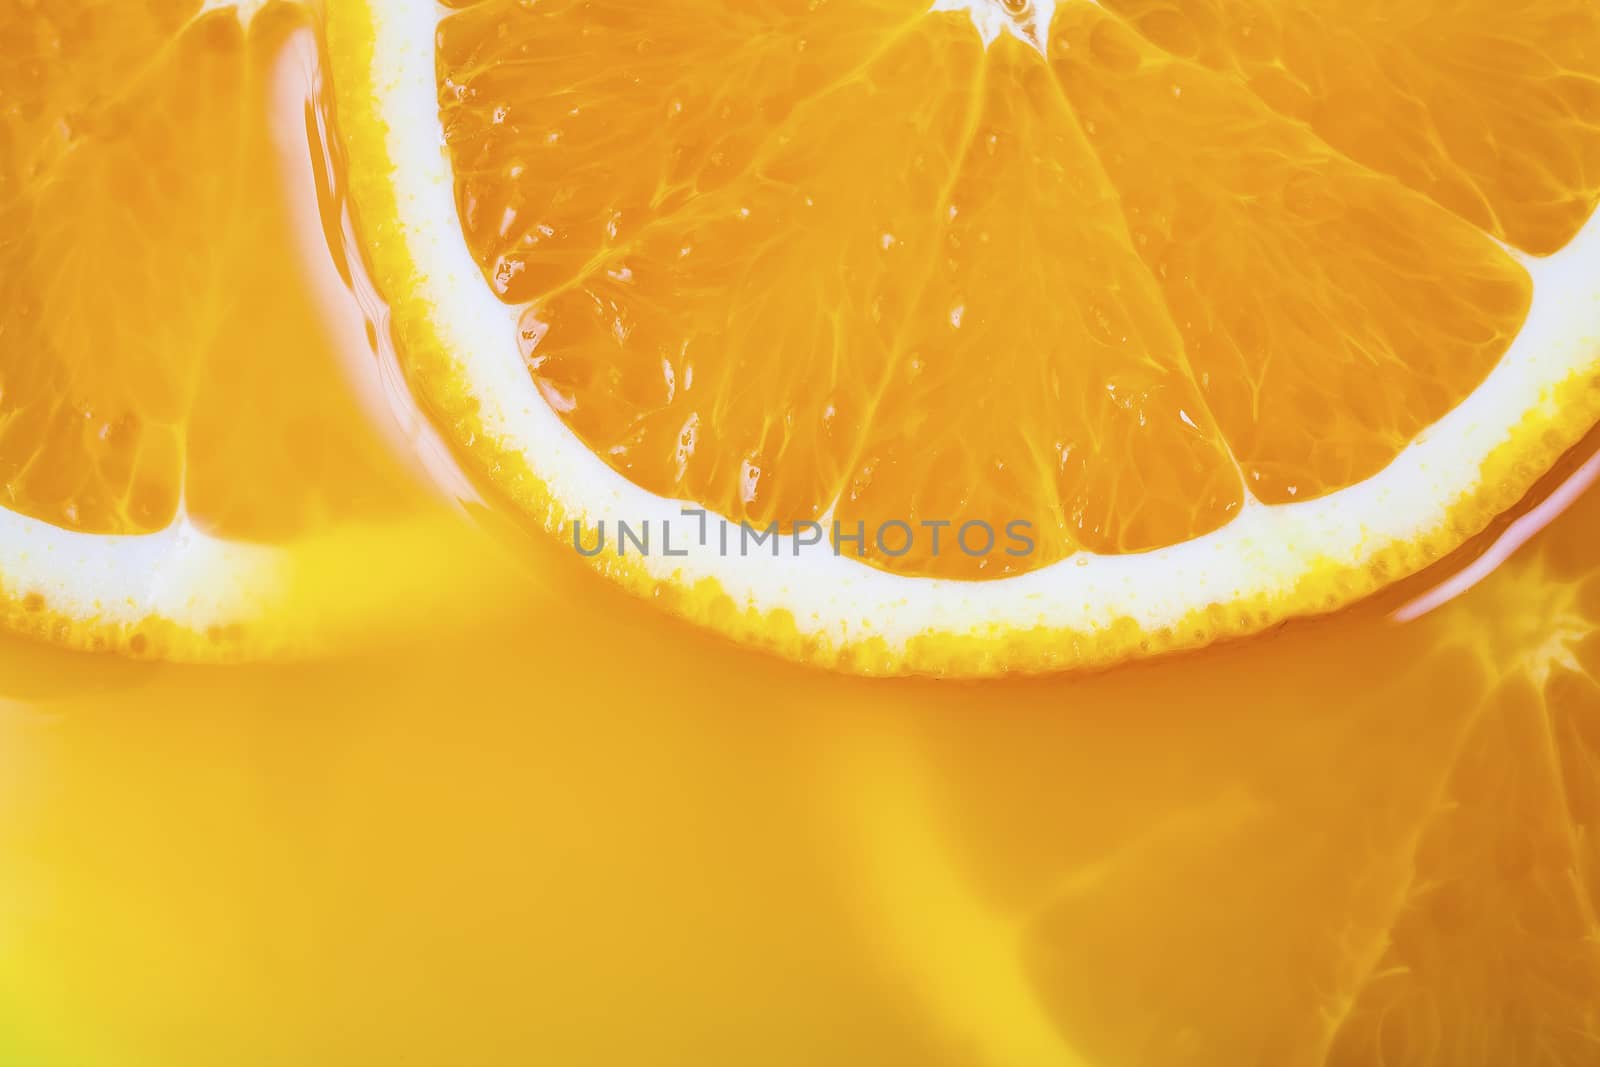 fresh a slice of orange close-up on yellow background